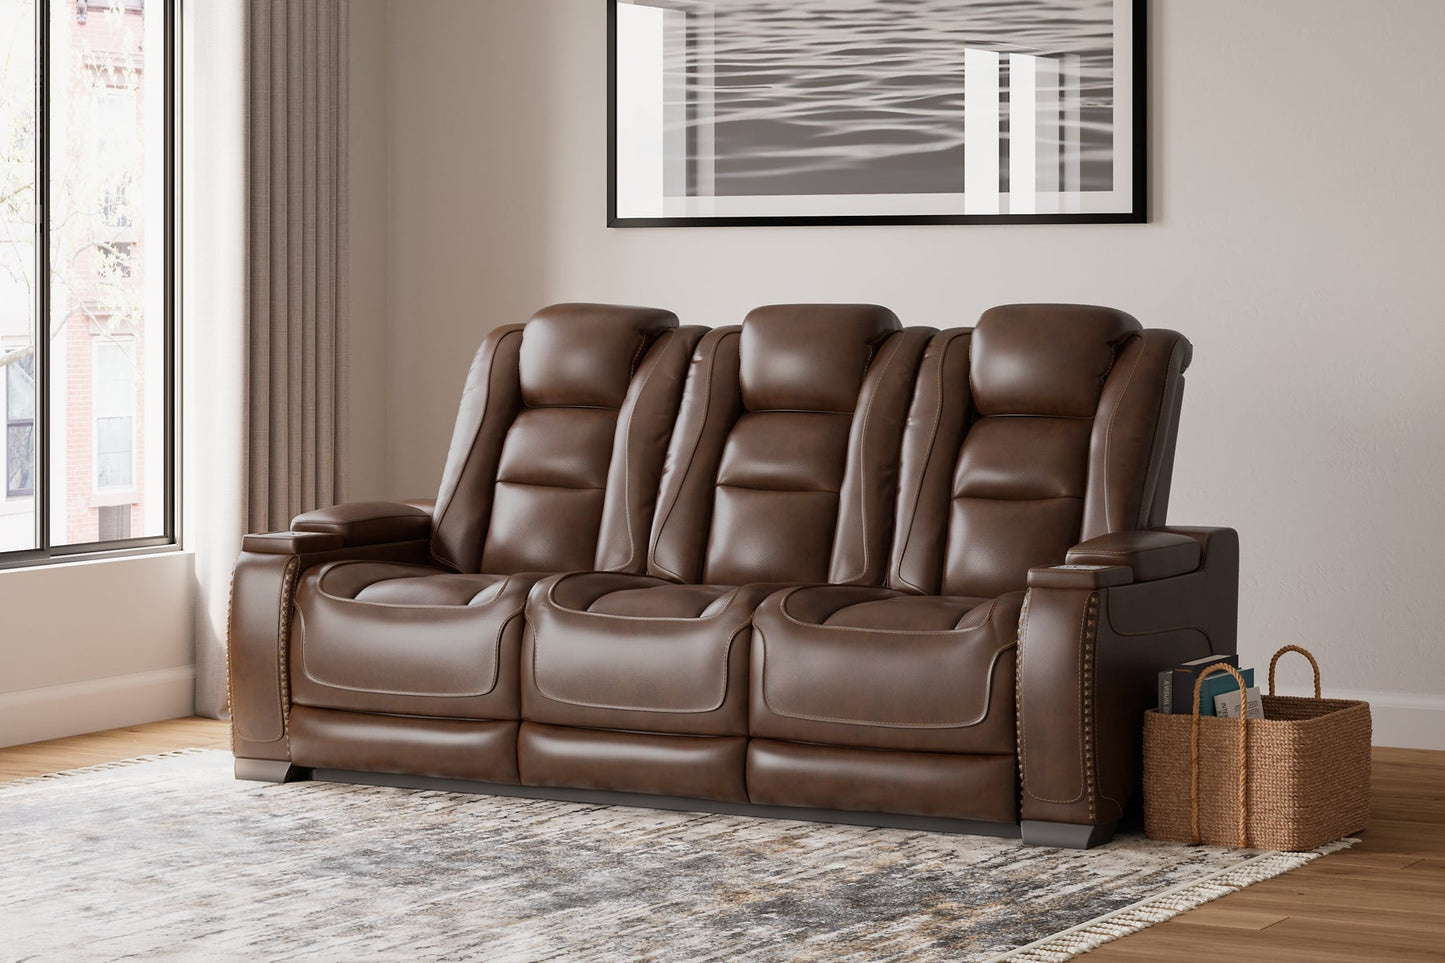 The Man-Den PWR REC Sofa with ADJ Headrest at Cloud 9 Mattress & Furniture furniture, home furnishing, home decor